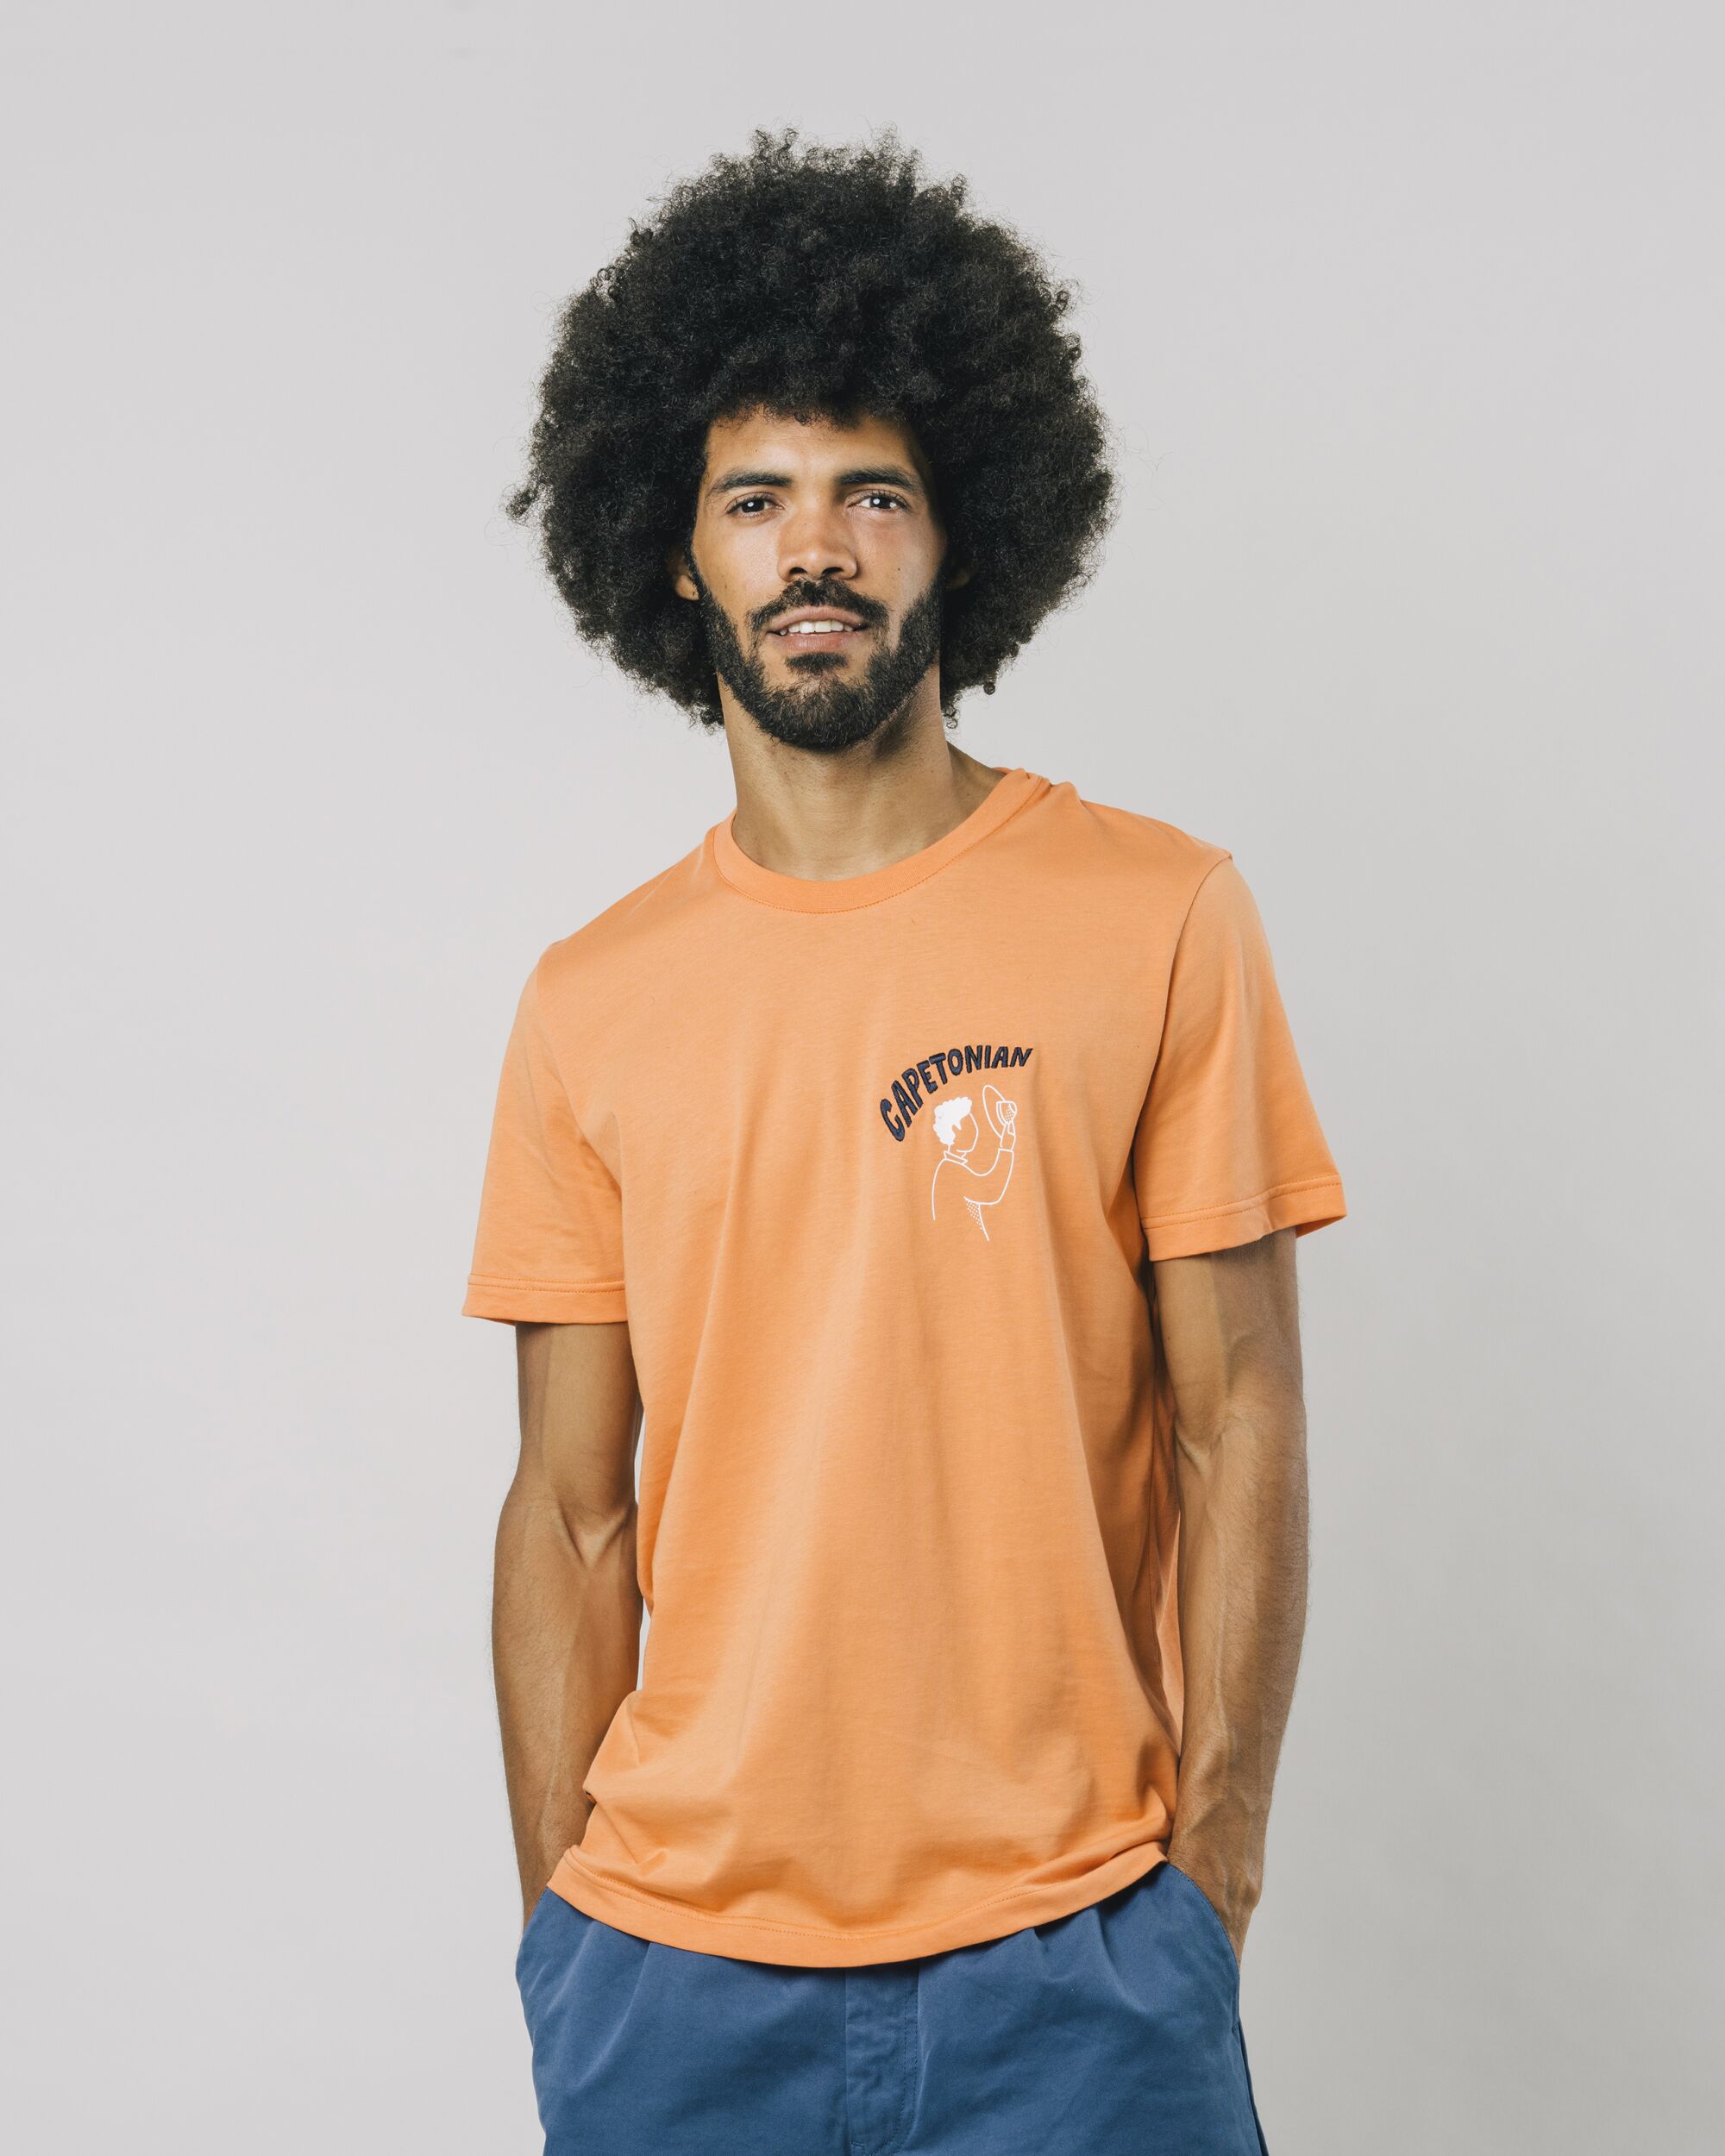 T-shirt "Capetonian" in orange made from 100% organic cotton from Brava Fabrics